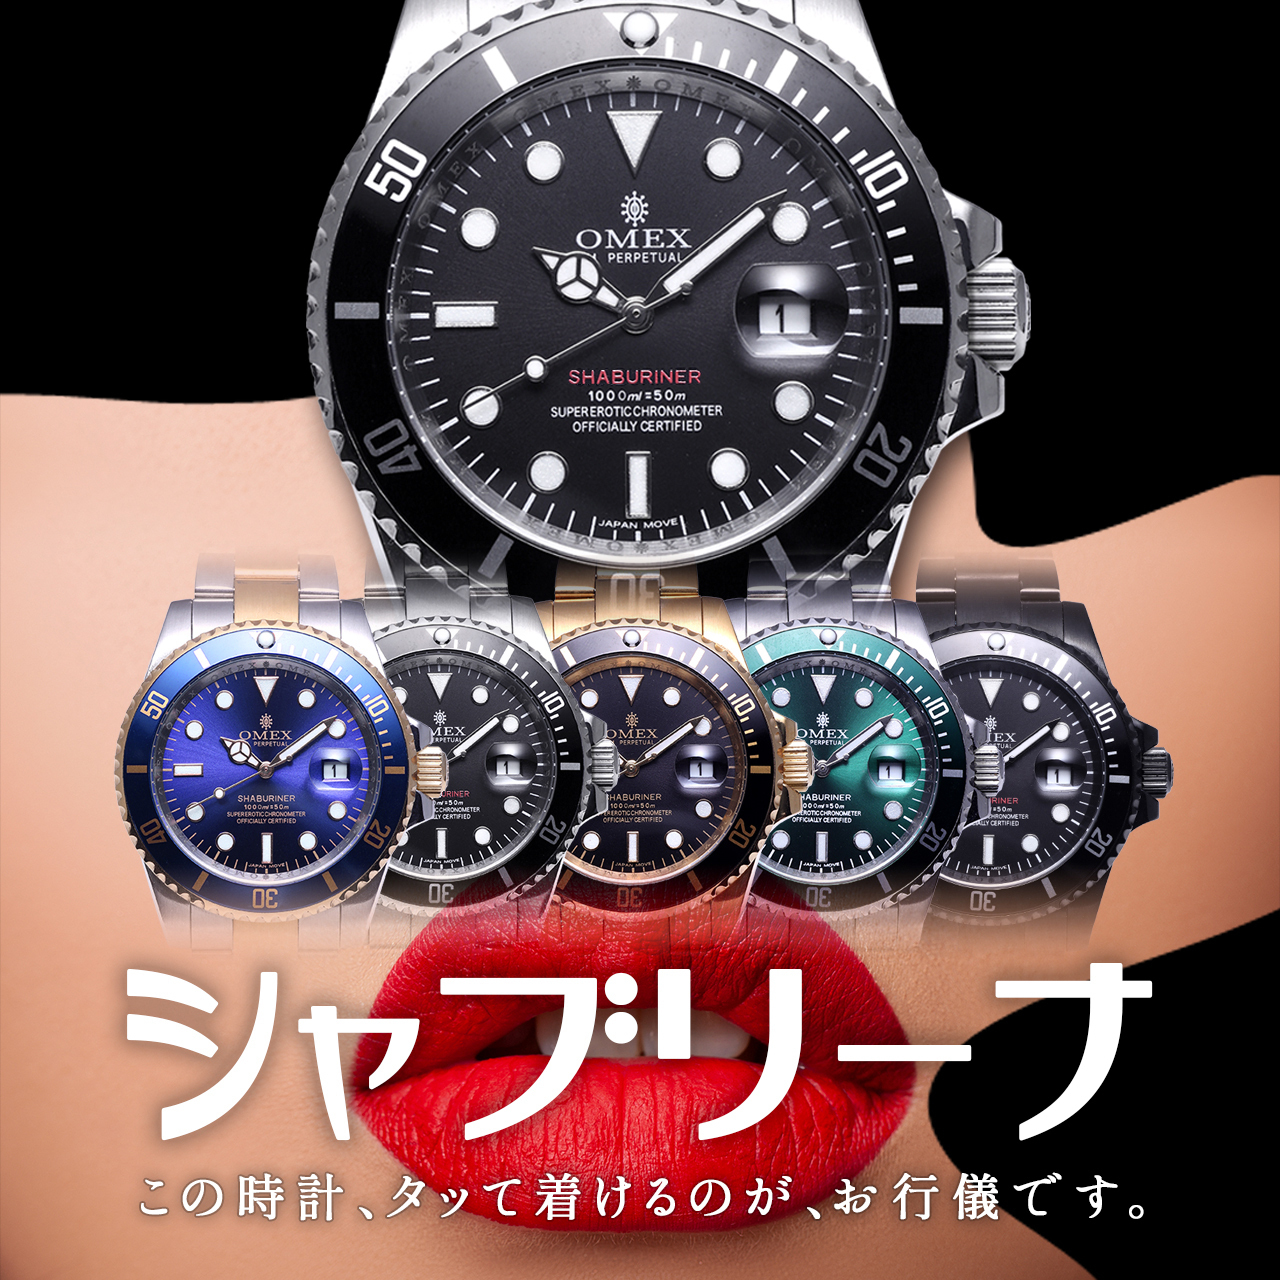 Omex Shaburiner オメックス シャブリーナ メンズ 腕時計 日本製 ムーブメント 金時計 銀時計 公式 変態高級腕時計 Omeco オメコ オンラインショップ